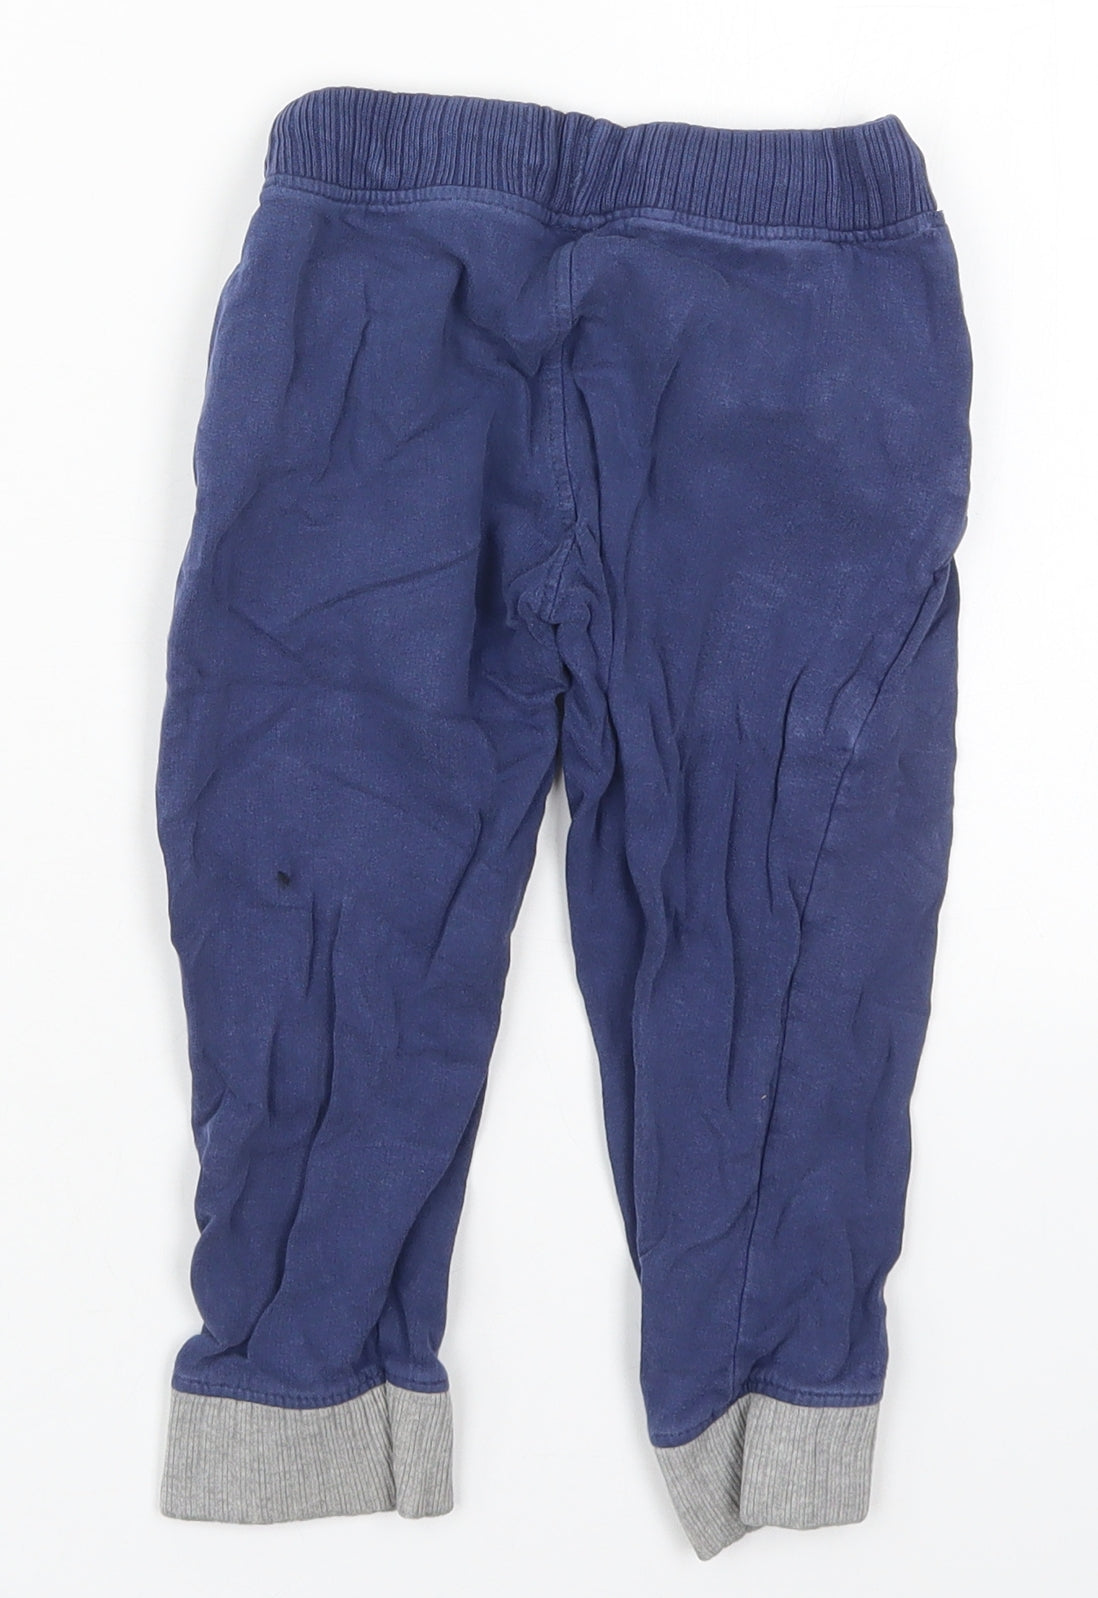 Urban Rascals Boys Blue  Cotton Sweatpants Trousers Size 4 Years  Regular  - 38